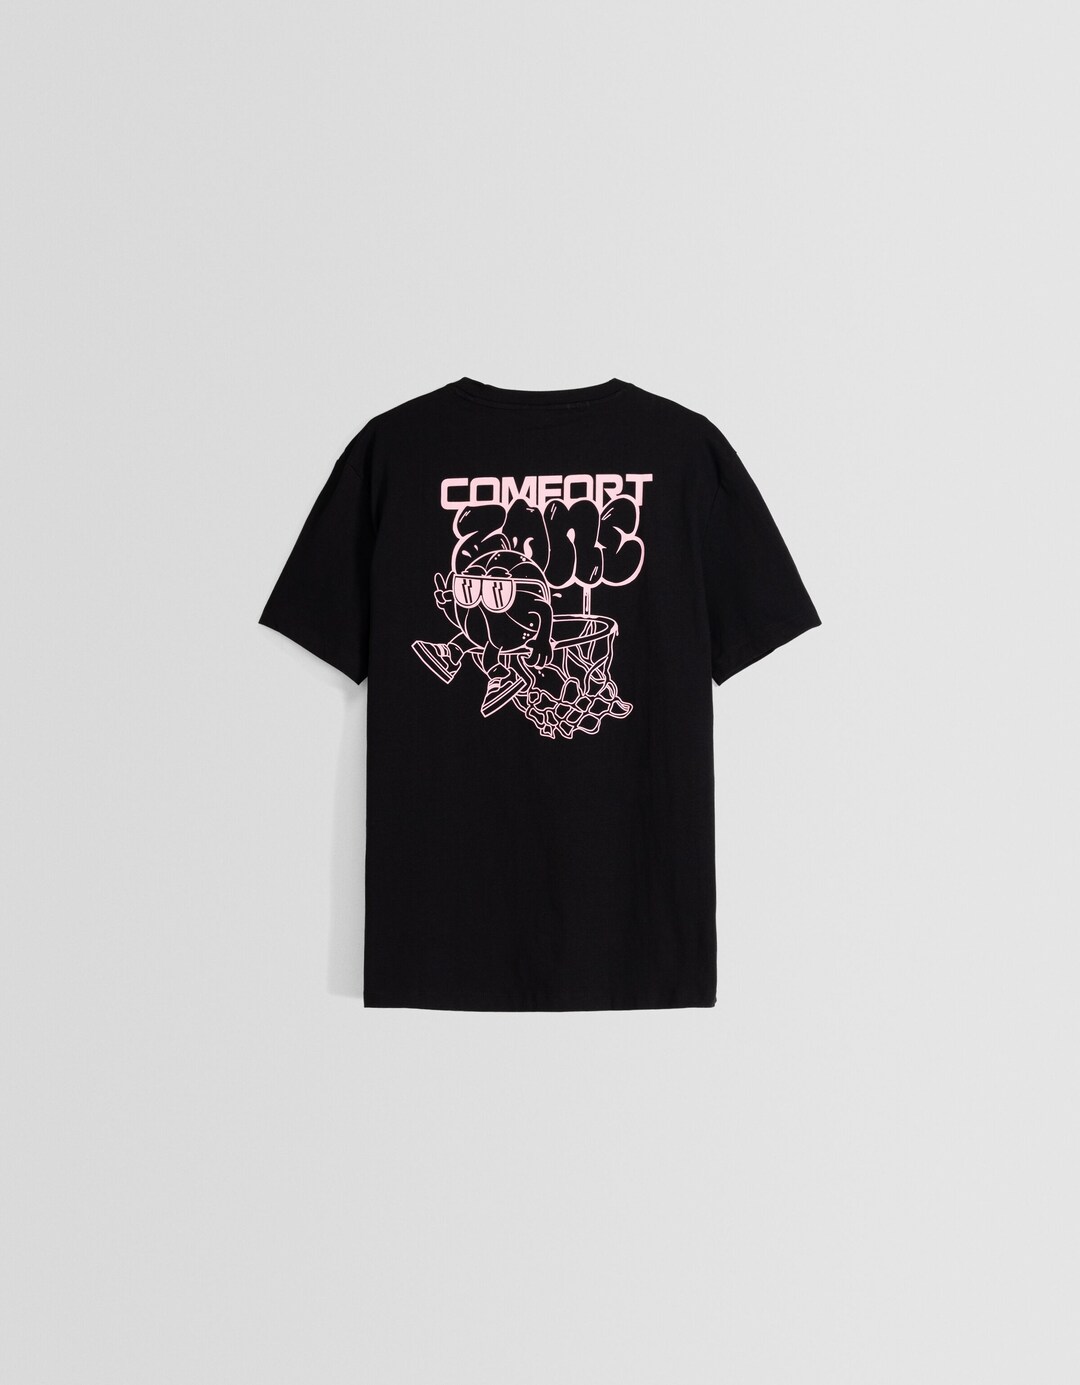 Men’s T-shirts | New Collection | BERSHKA